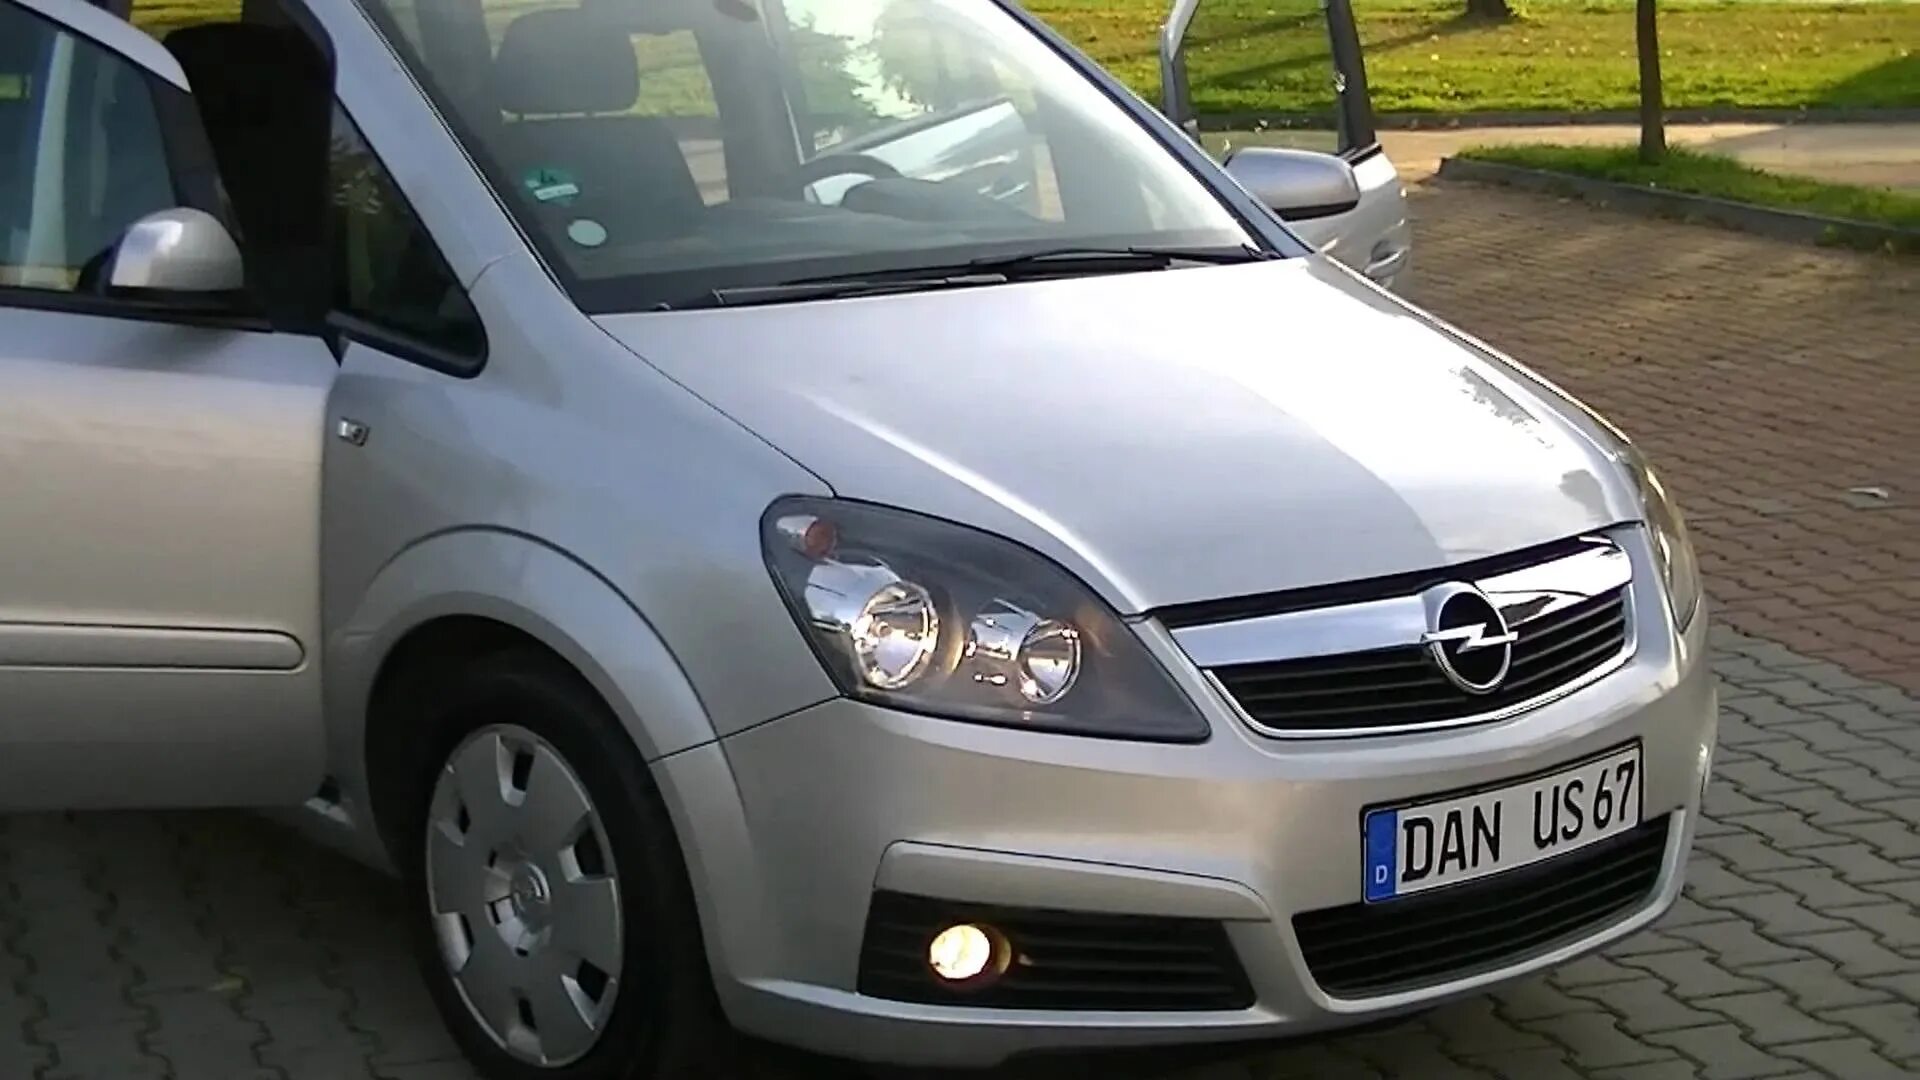 Opel Zafira 2008 бежевый. Опель Зафира 1.9 дизель. Opel Zafira b 1.9 CDTI. Zafira b 2005. Опель зафира б 1.9 cdti